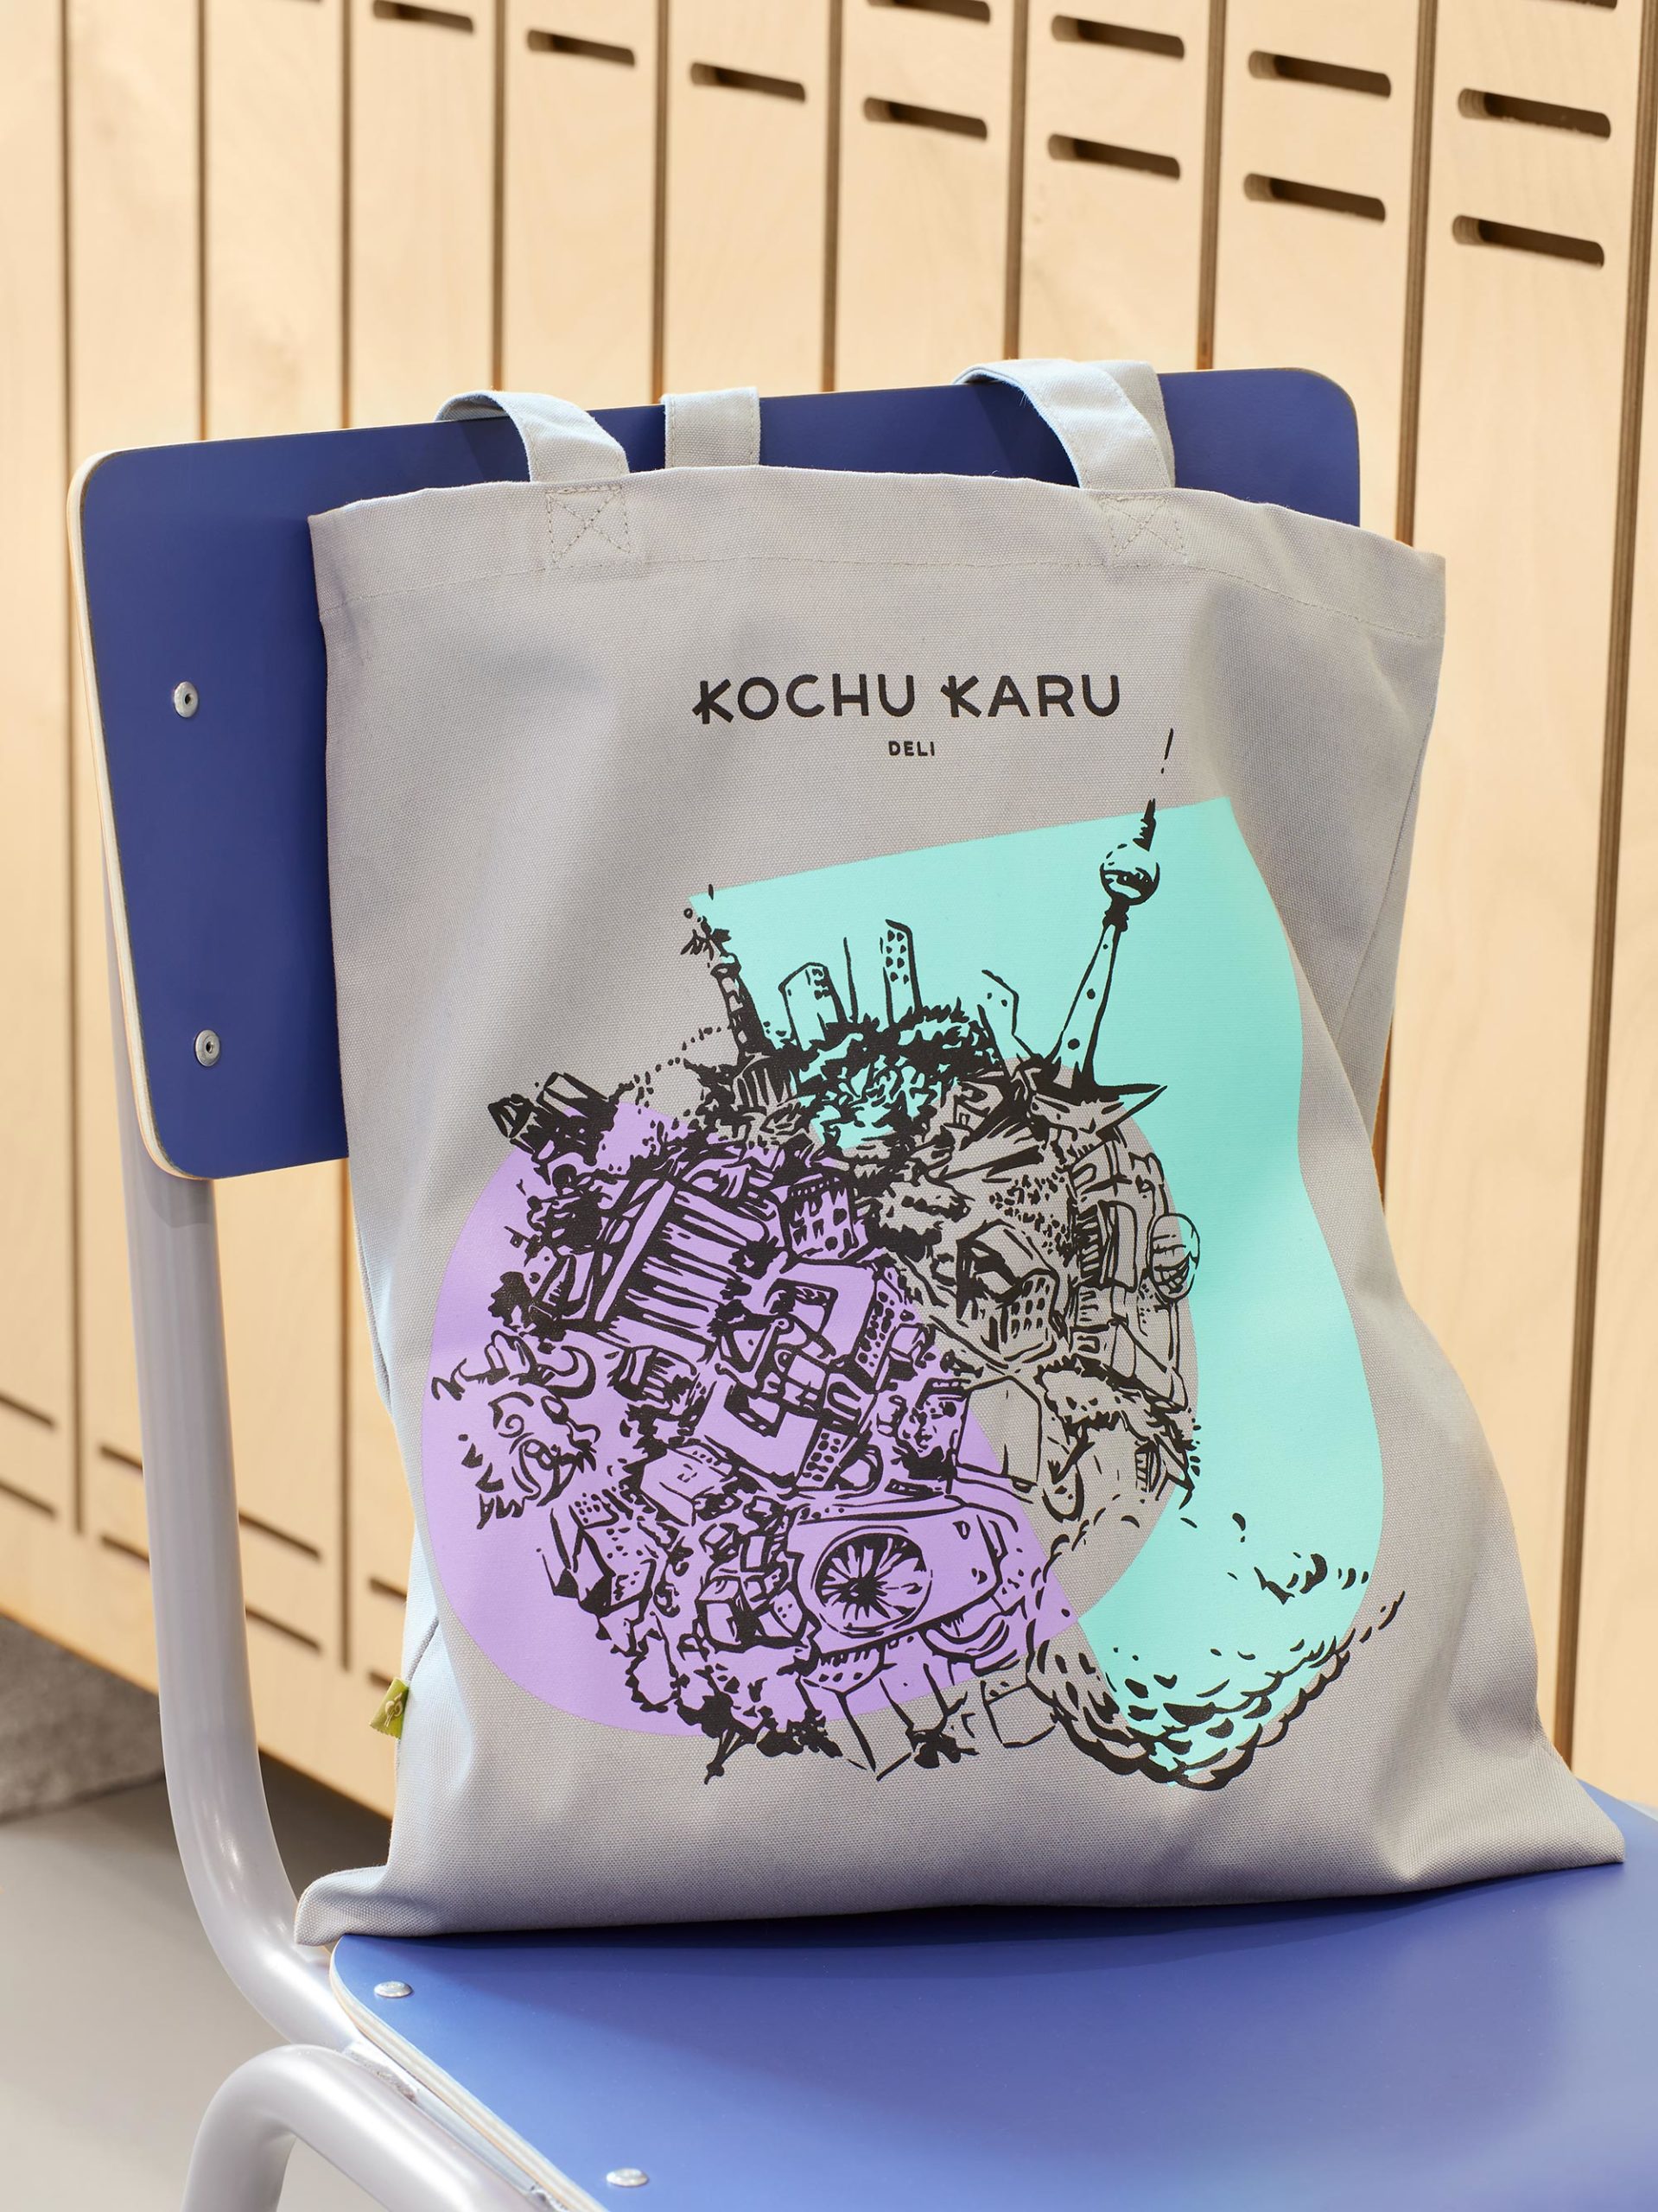 Kochu Karu Deli Stoffbeutel in grau mit farbiger Illustration und Logo auf blauem Stuhl